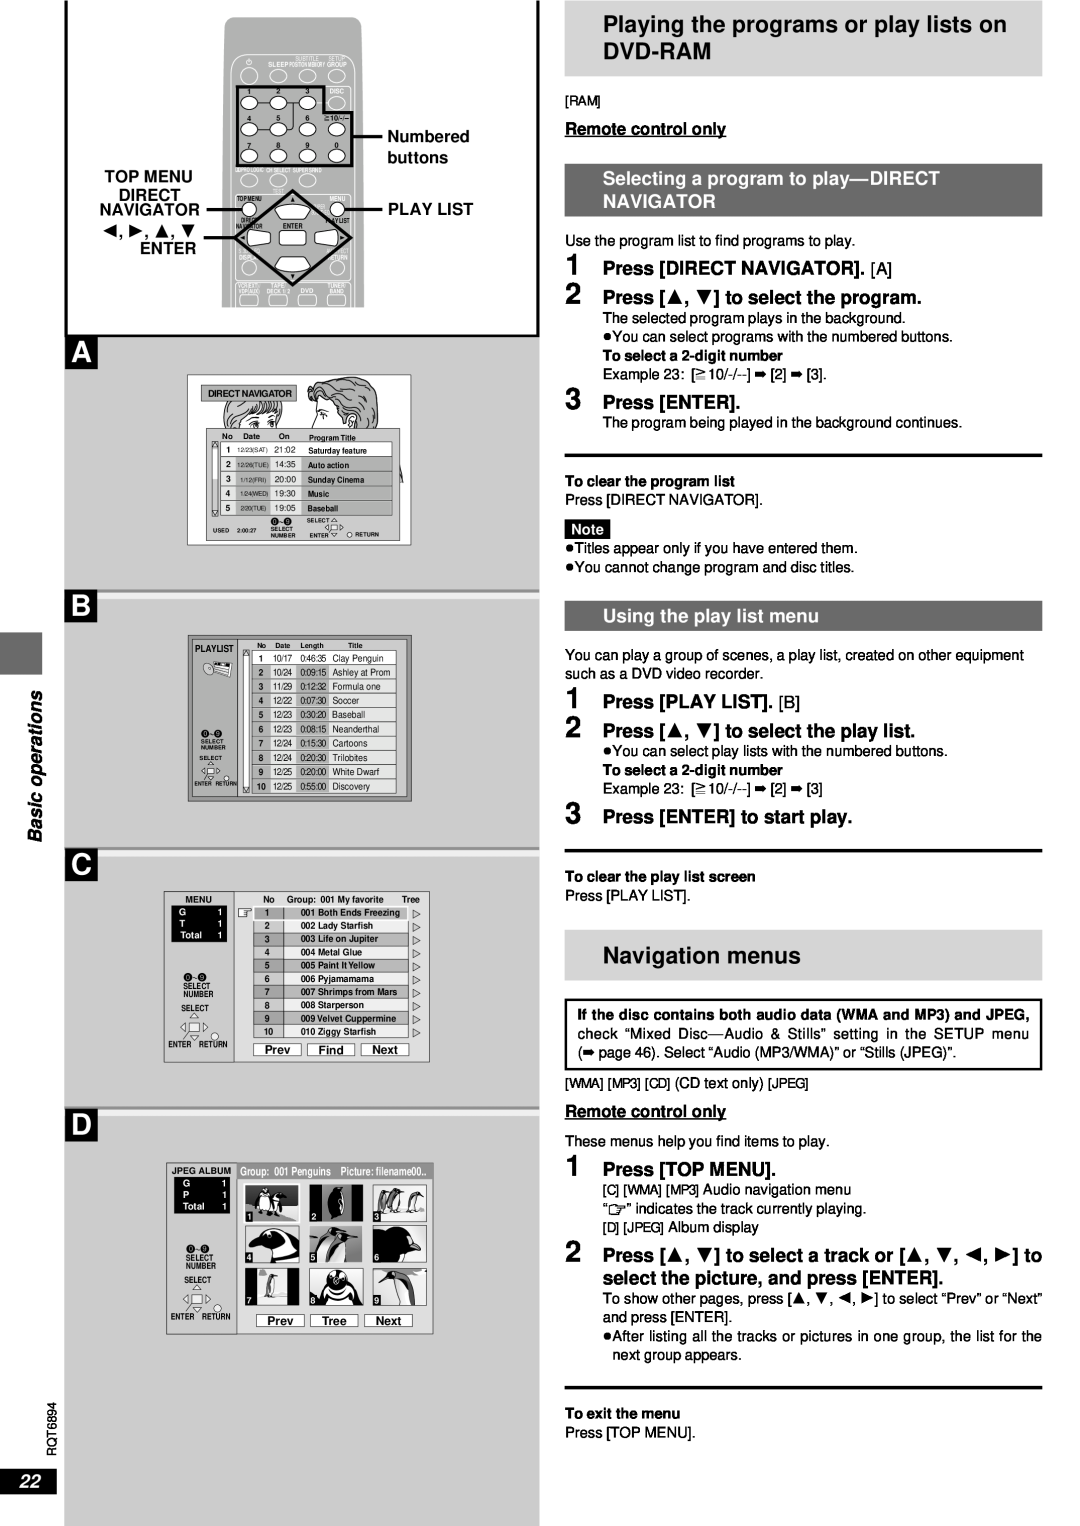 Technics SC-DV290 Playing the programs or play lists on DVD-RAM, Navigation menus, Press DIRECT NAVIGATOR. A, Press ENTER 